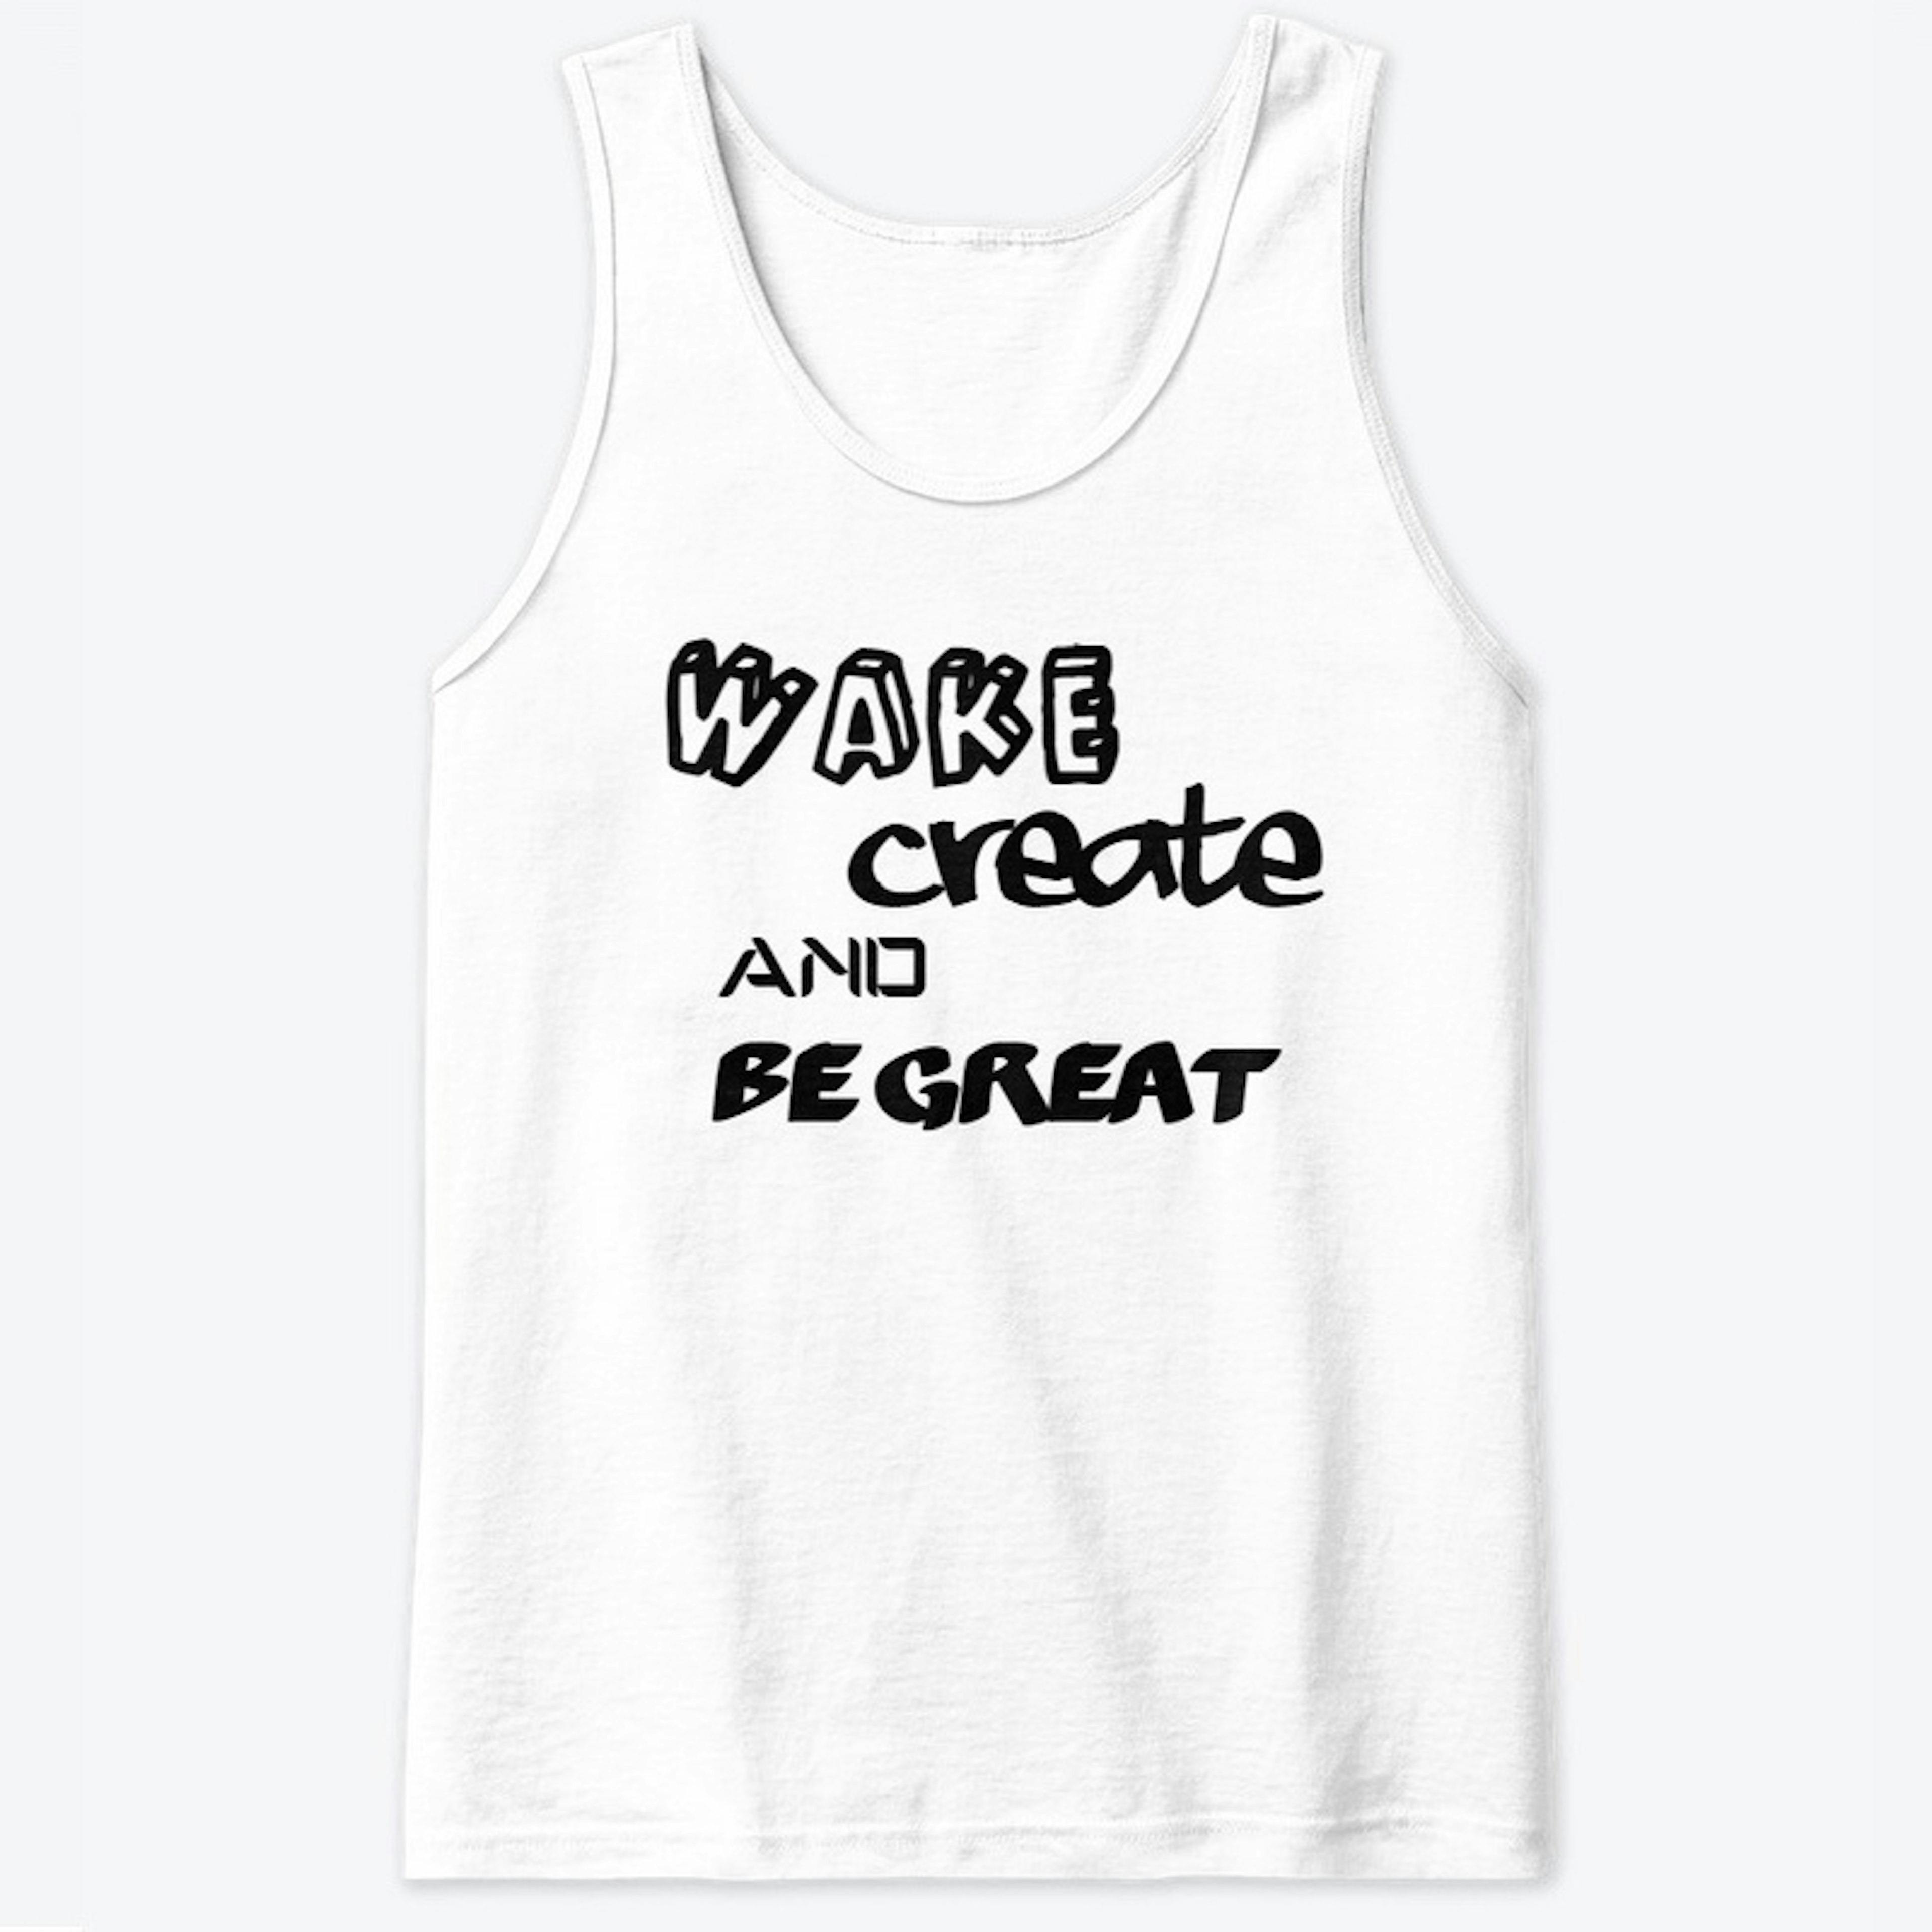 WAKE AND CREATE